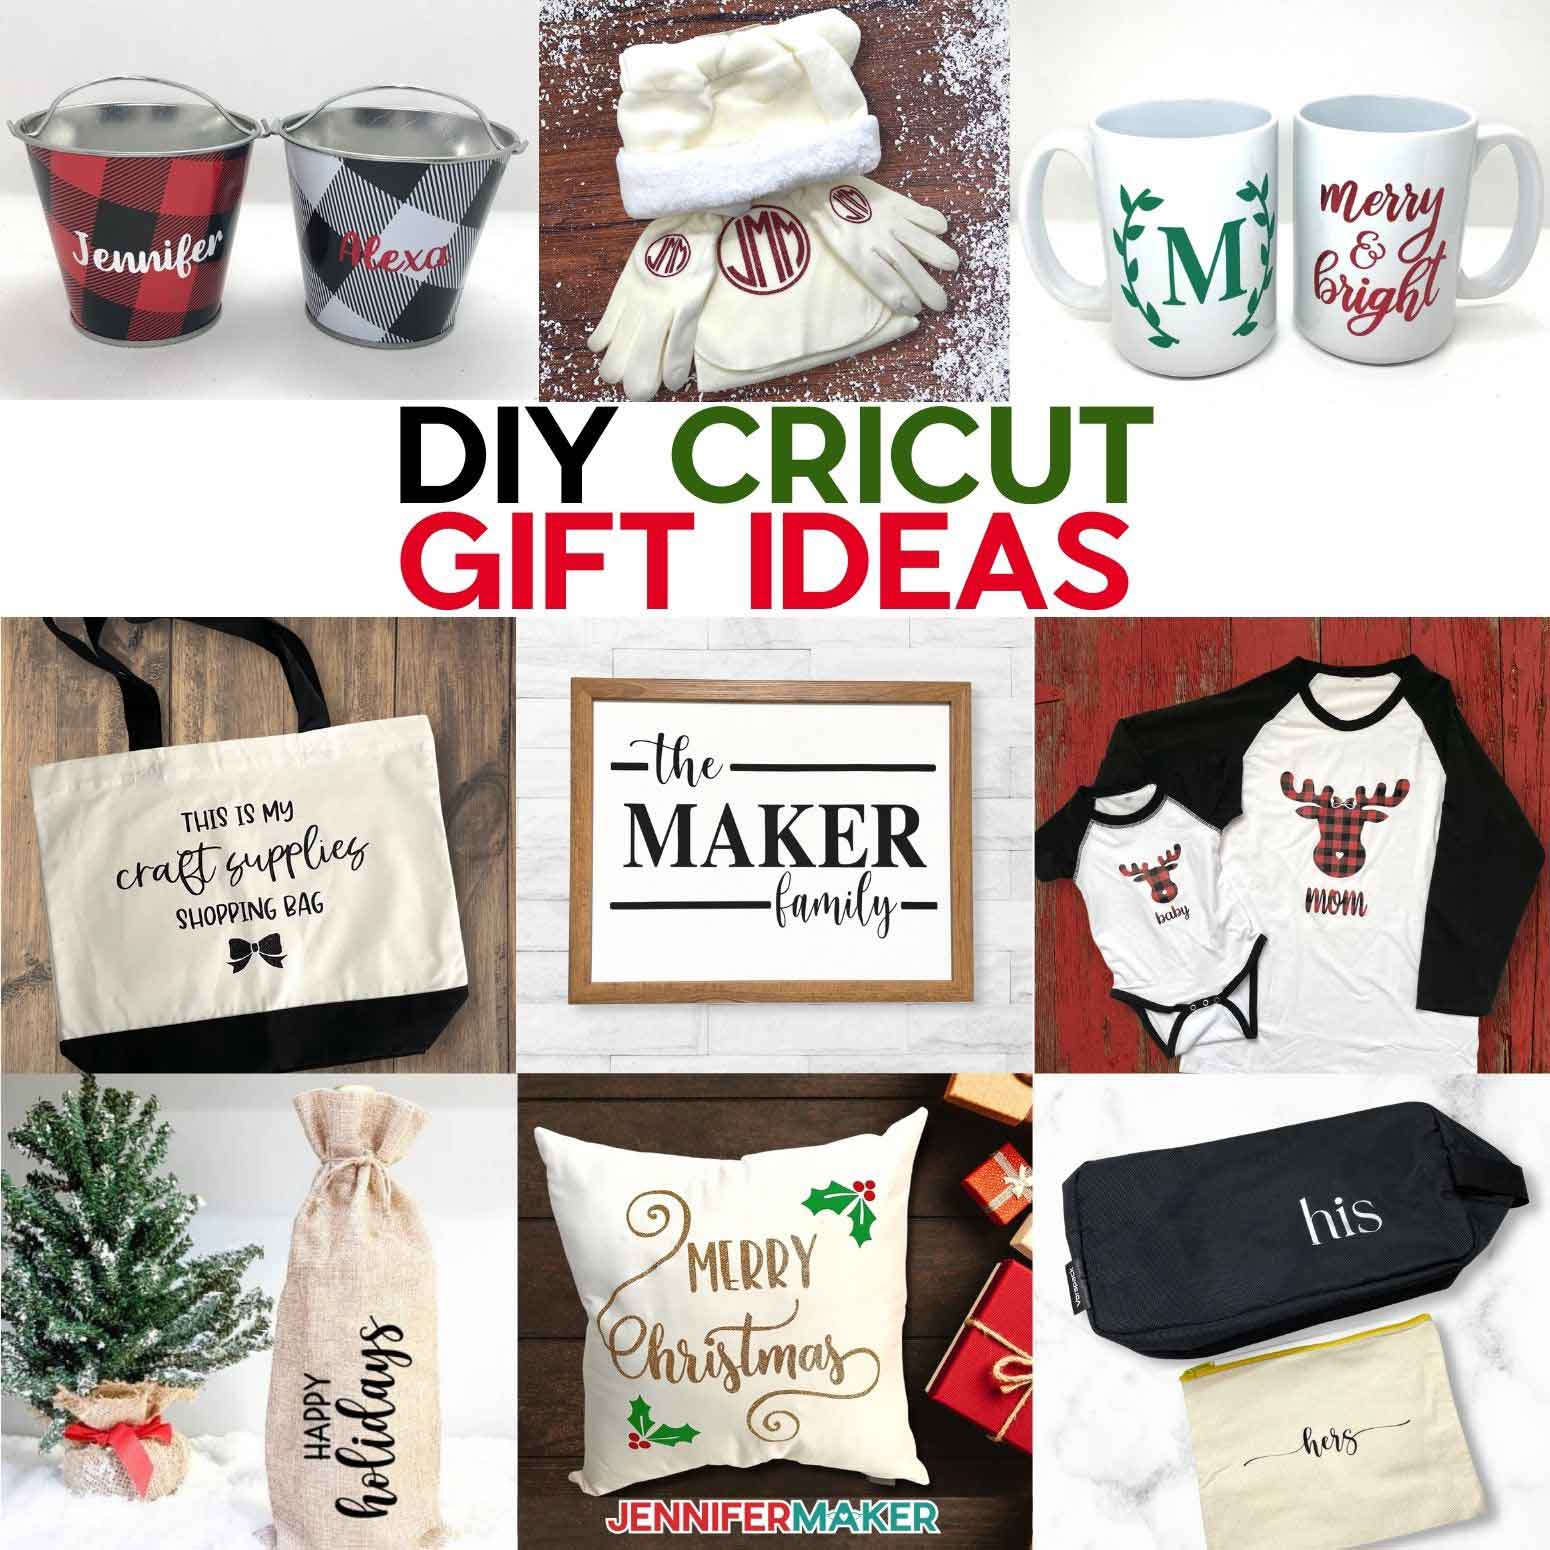 12 DIY Cricut Gift Ideas: Totes, Shirts, Bags, Crates, & More!